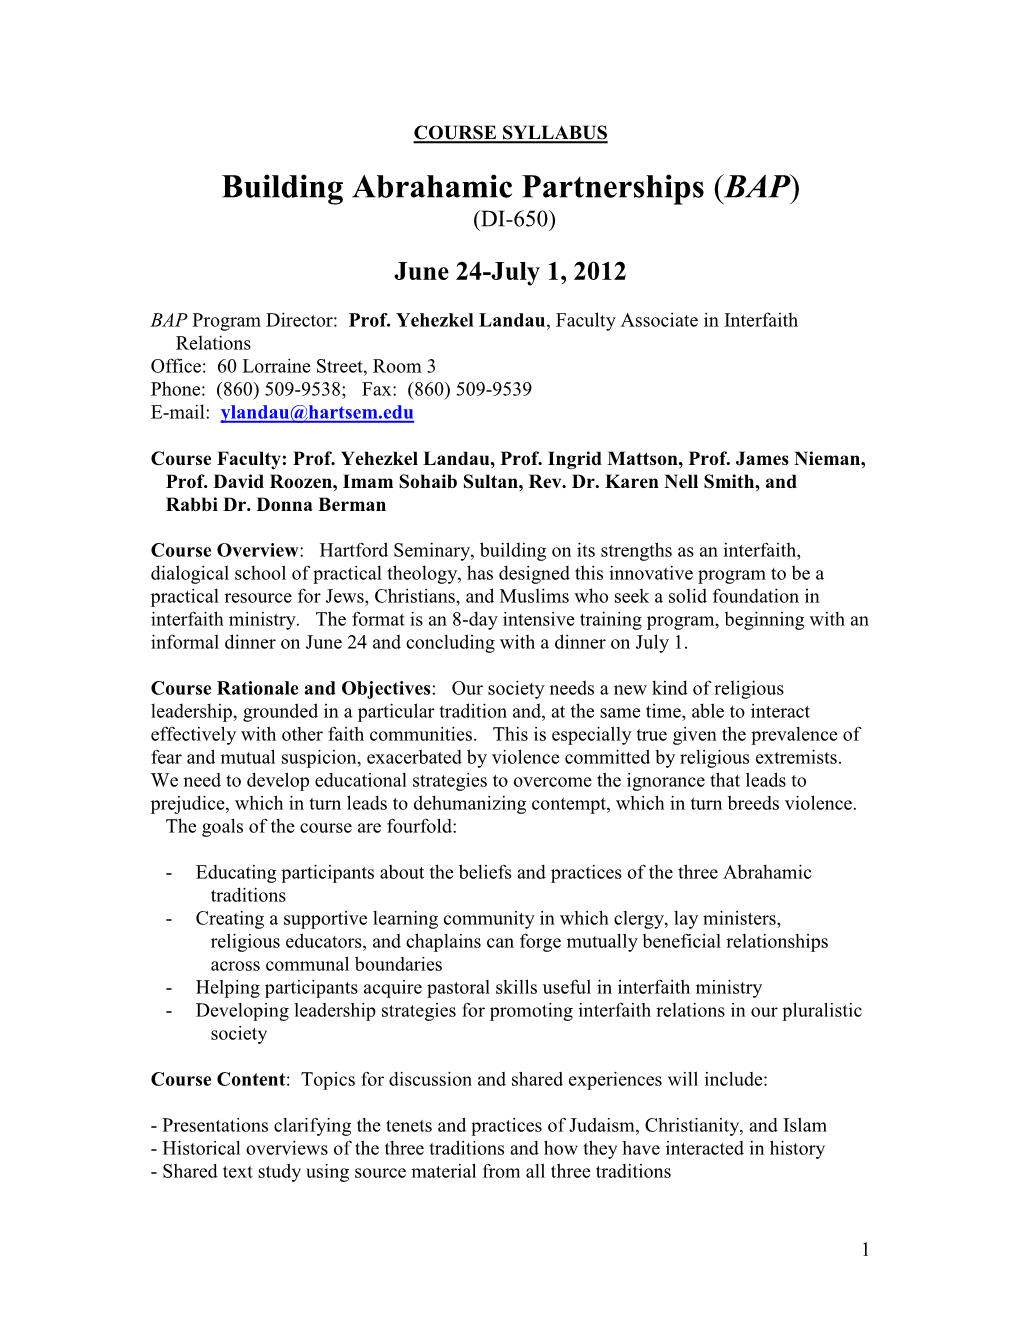 Building Abrahamic Partnerships (BAP) (DI-650)